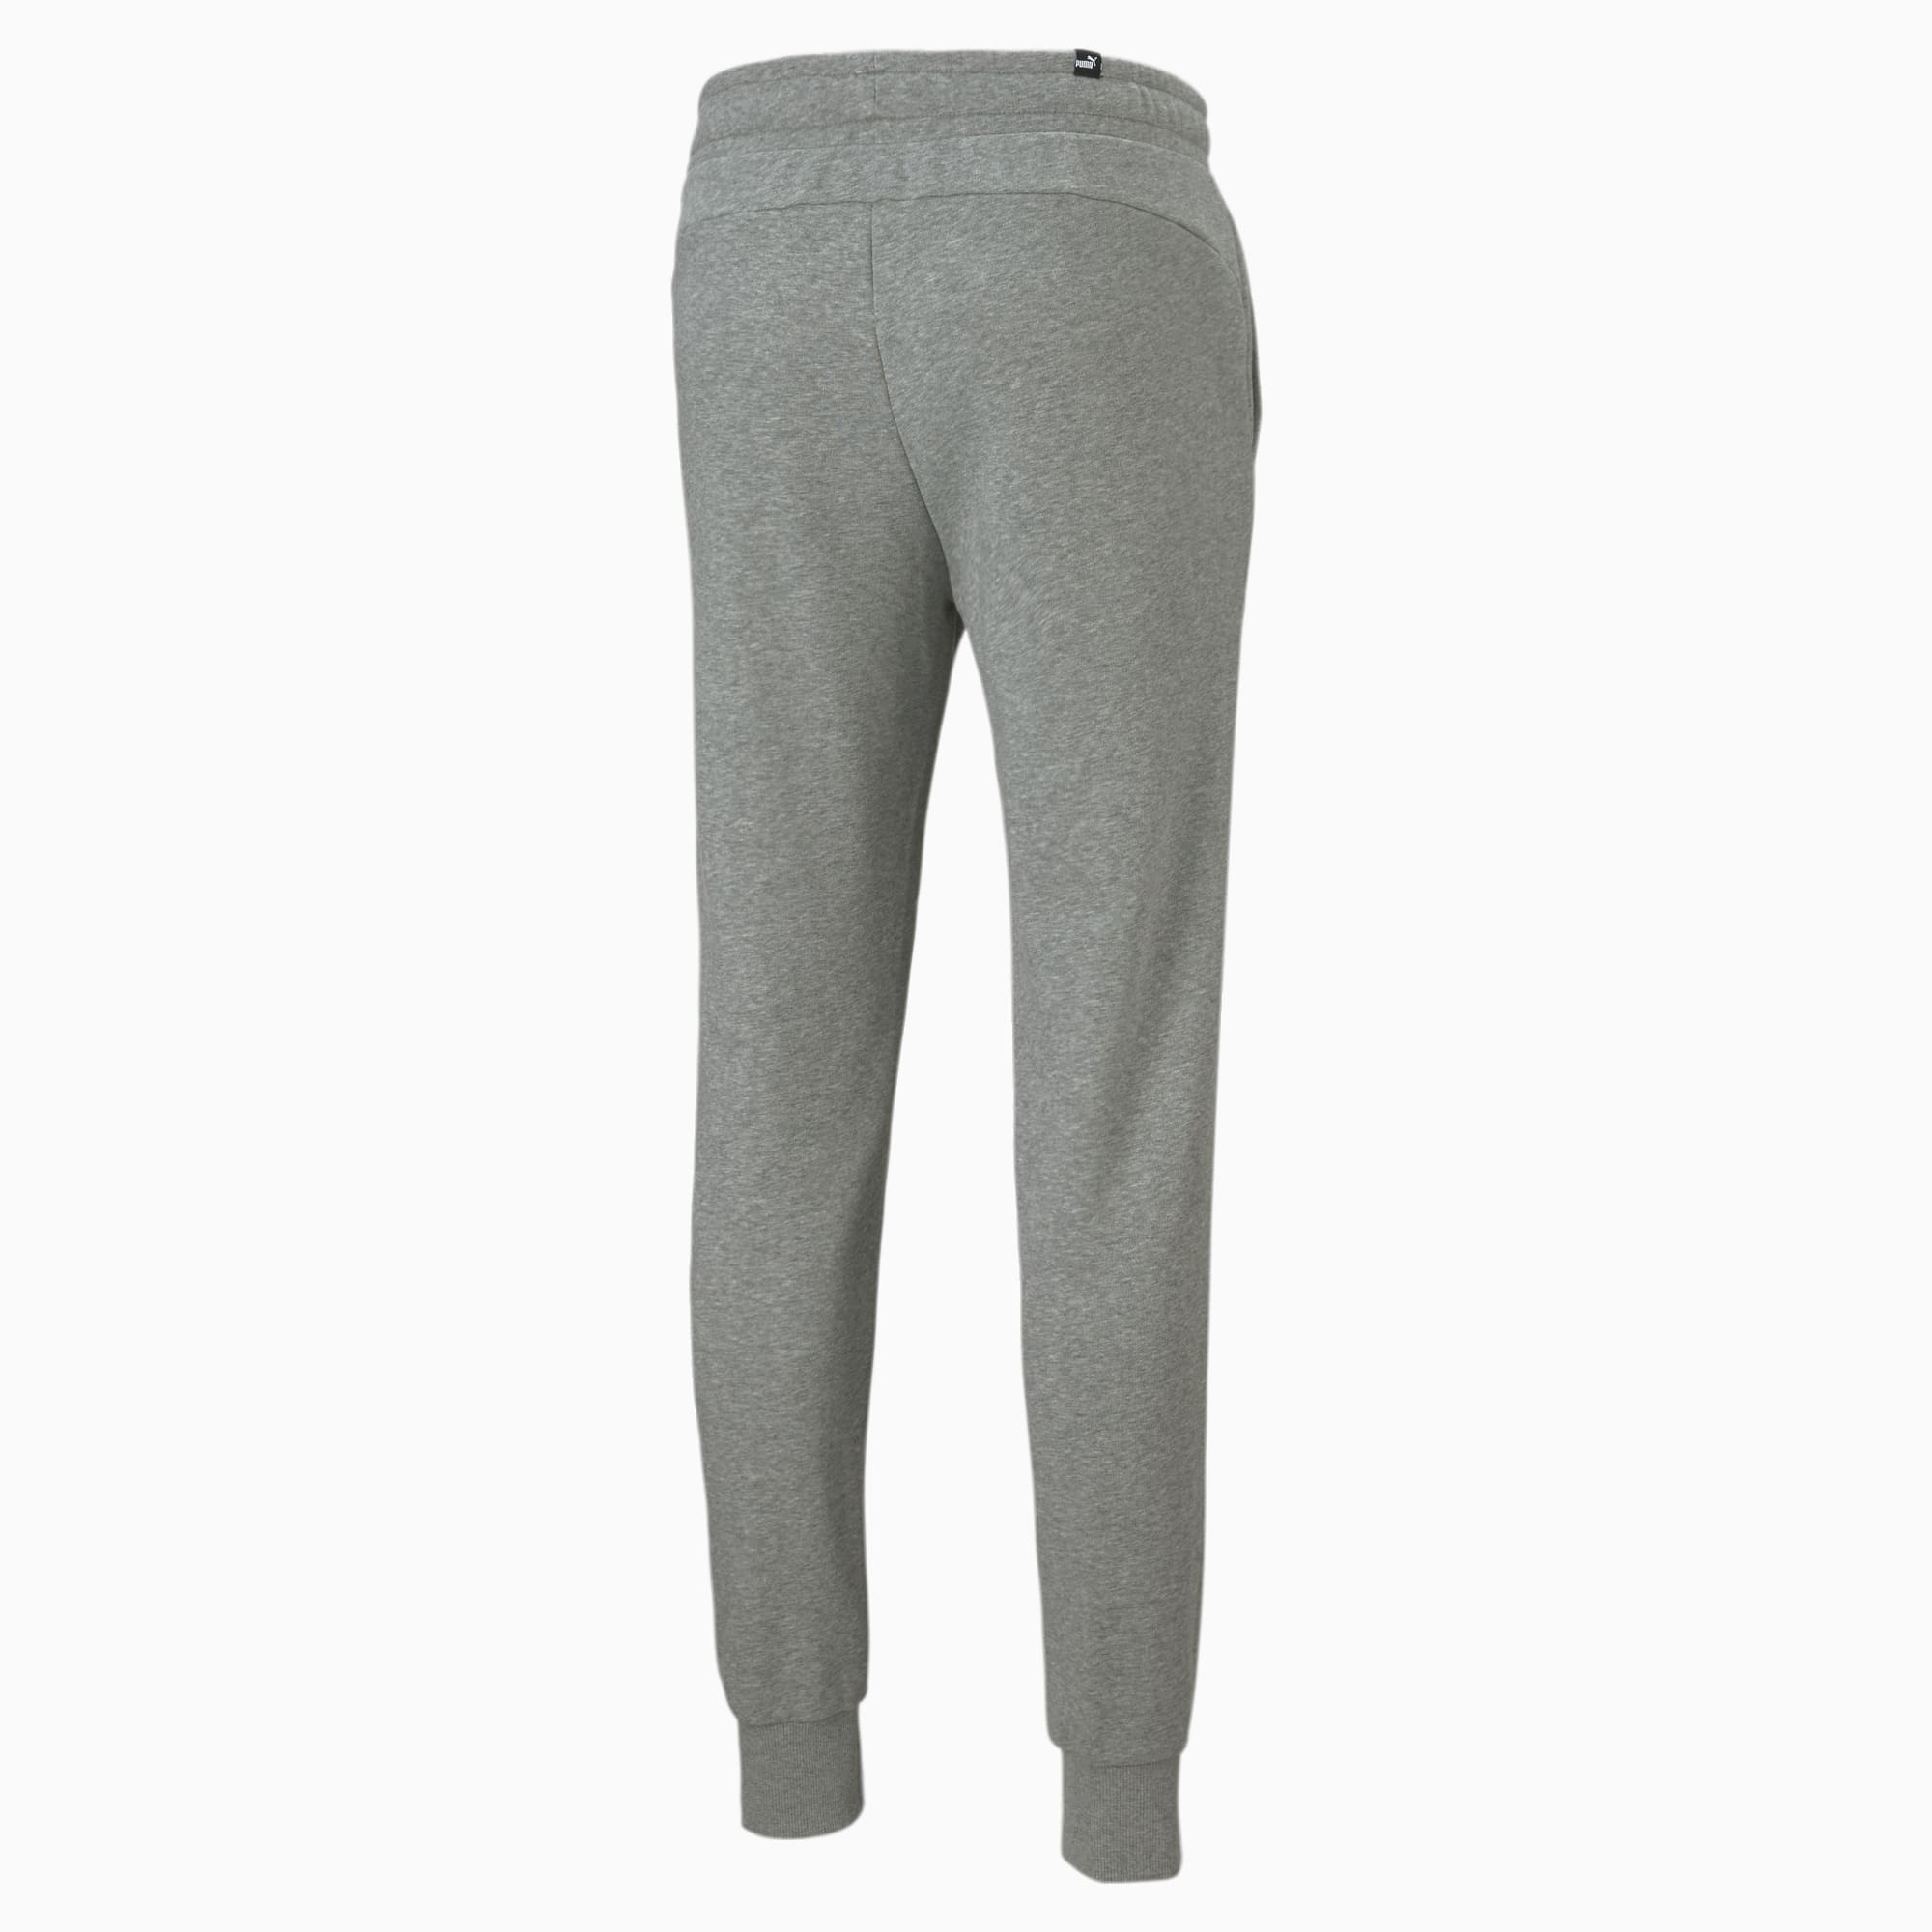 PUMA Essentials Slim Men's Pants, Medium Grey Heather, Size XXL, Clothing